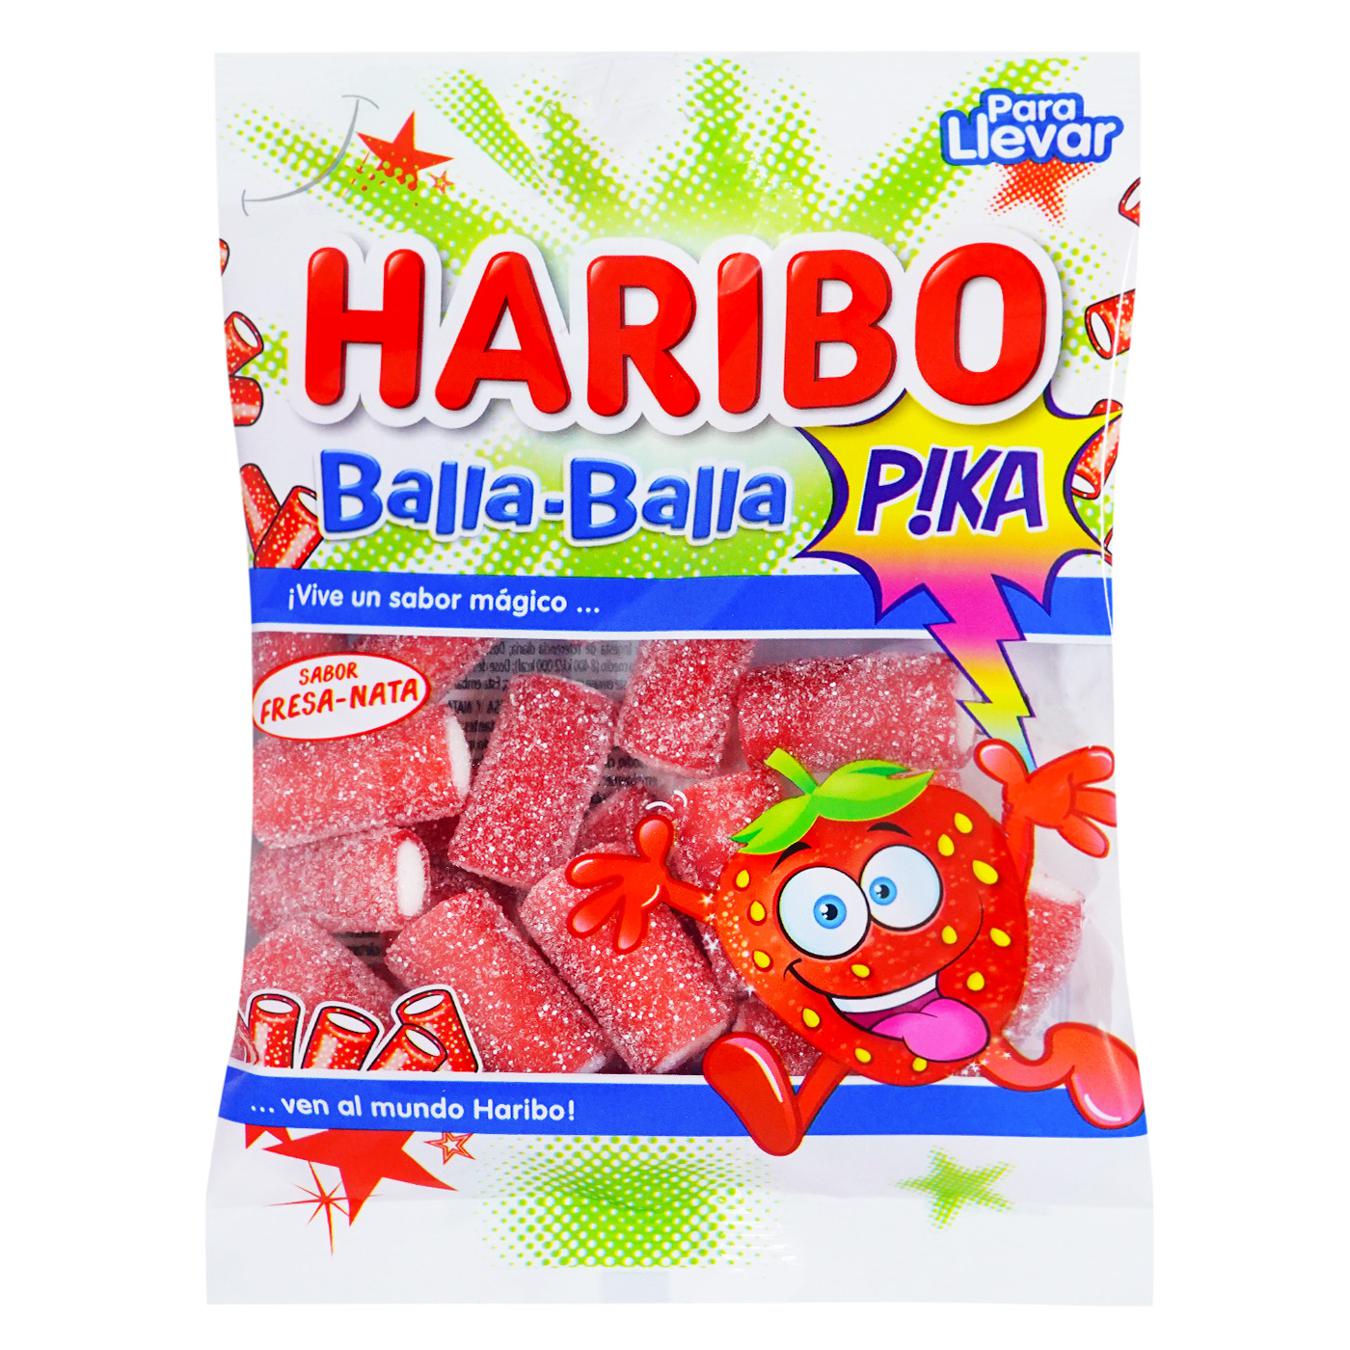 Haribo Balla-Balla Pika chewy strawberry candies 100g